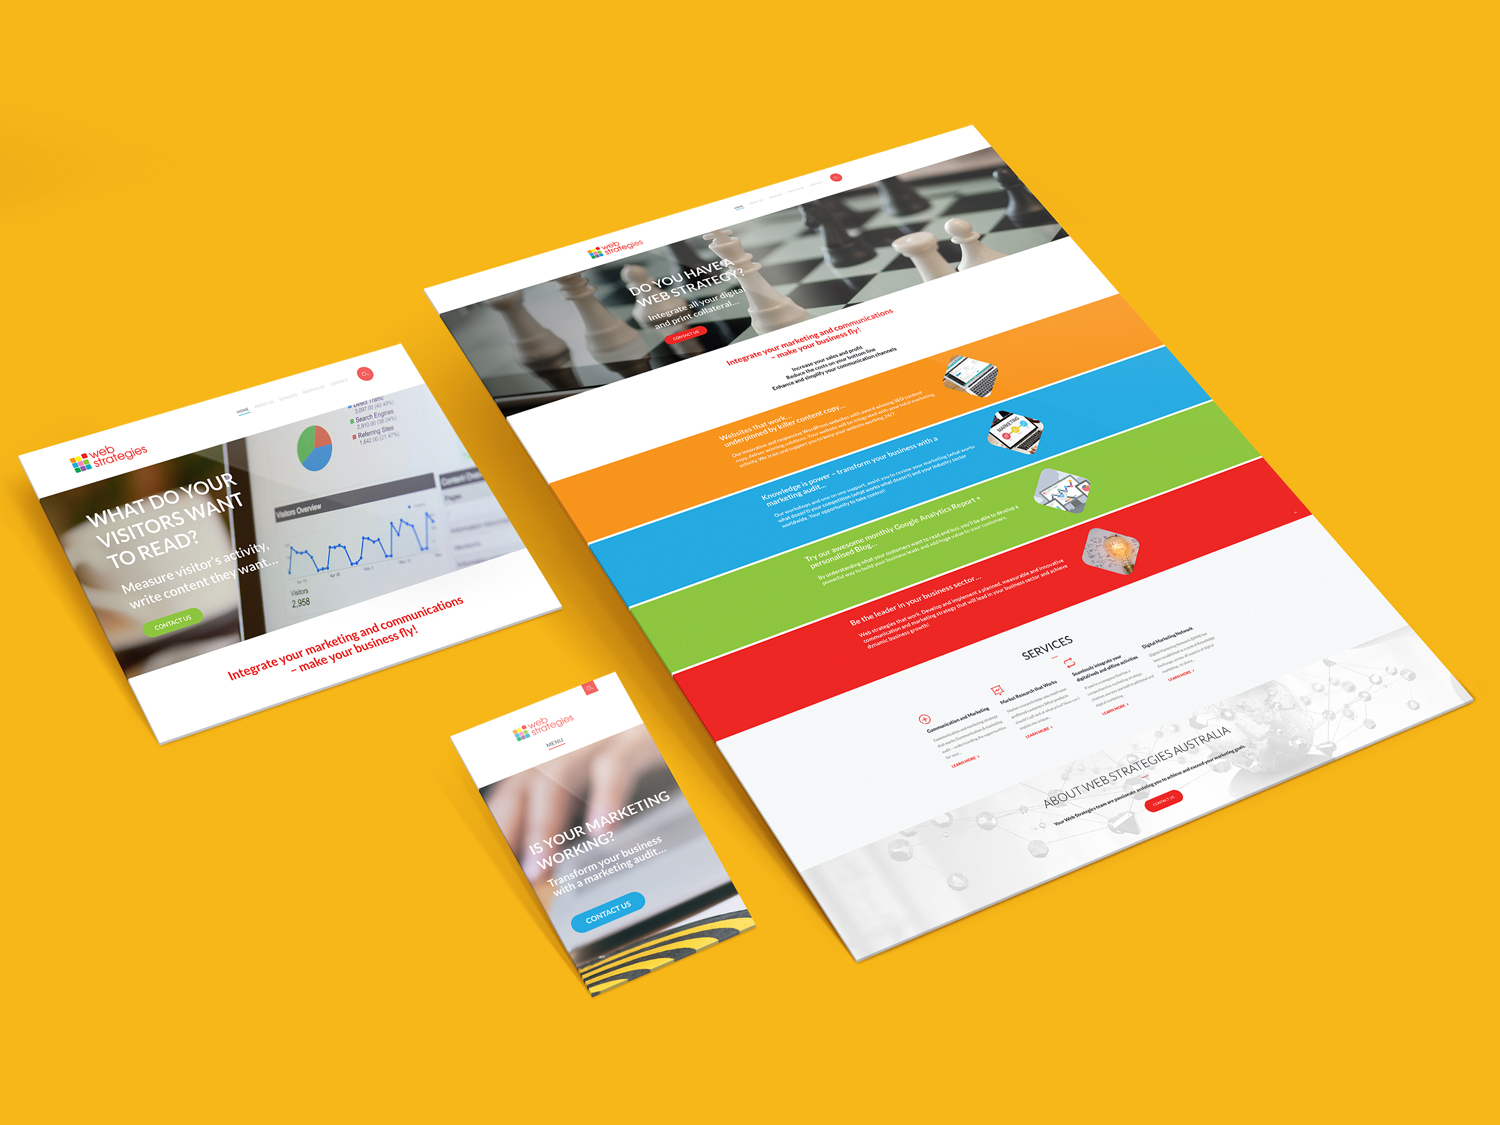 Purple Possum Design – Web Design Wangaratta – Web Strategies Australia